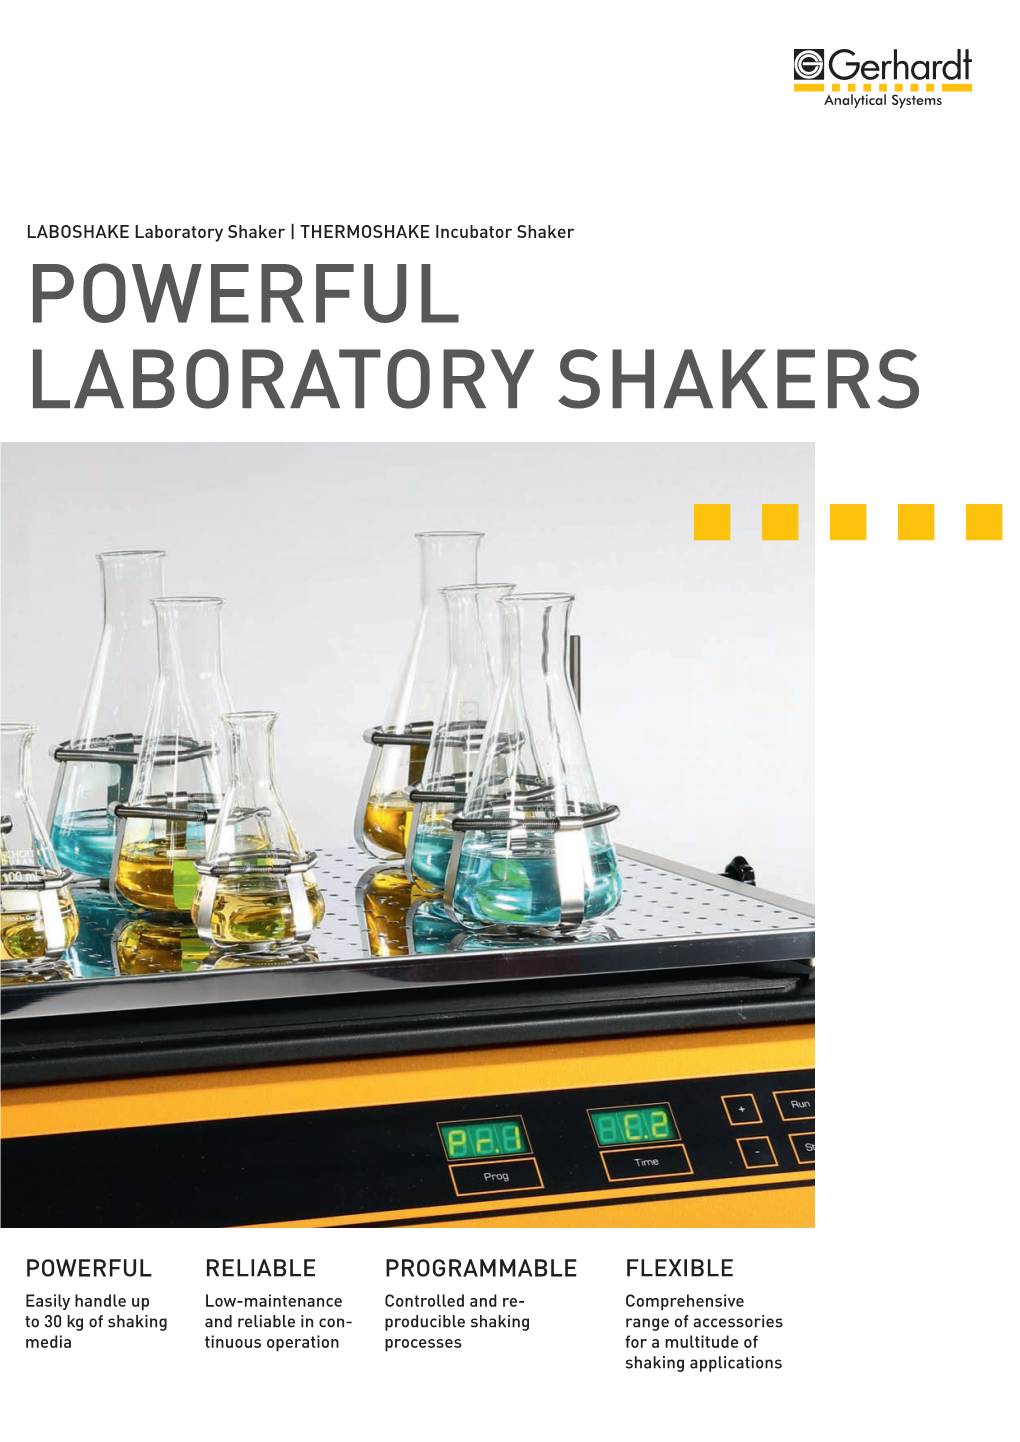 Gerhardt Laboratory Shakers Brochure